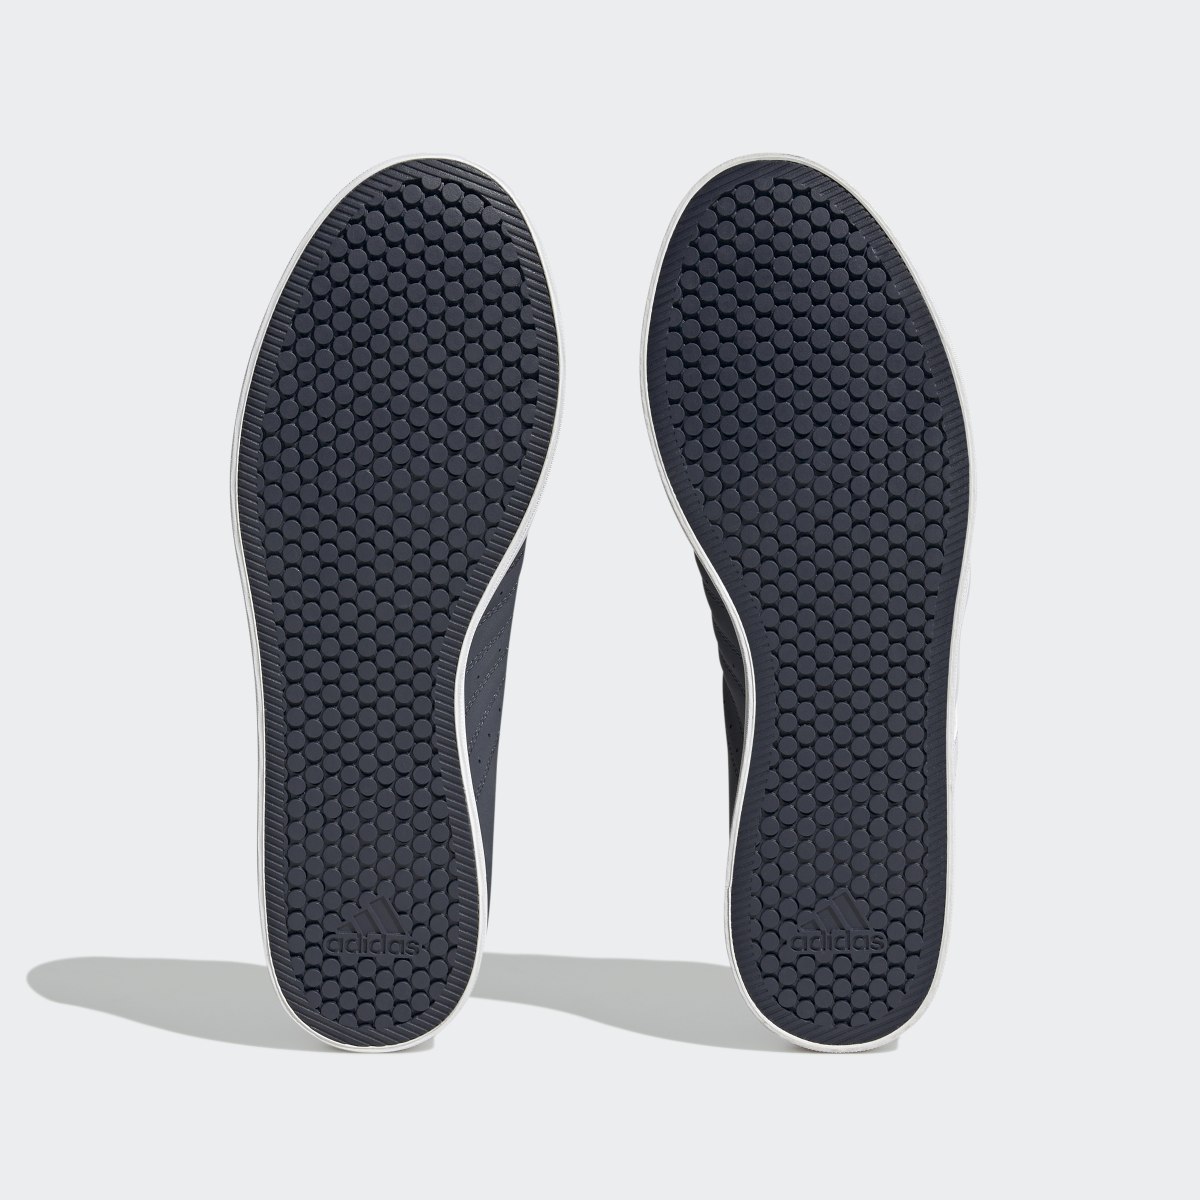 Adidas VS Pace 2.0 Ayakkabı. 4